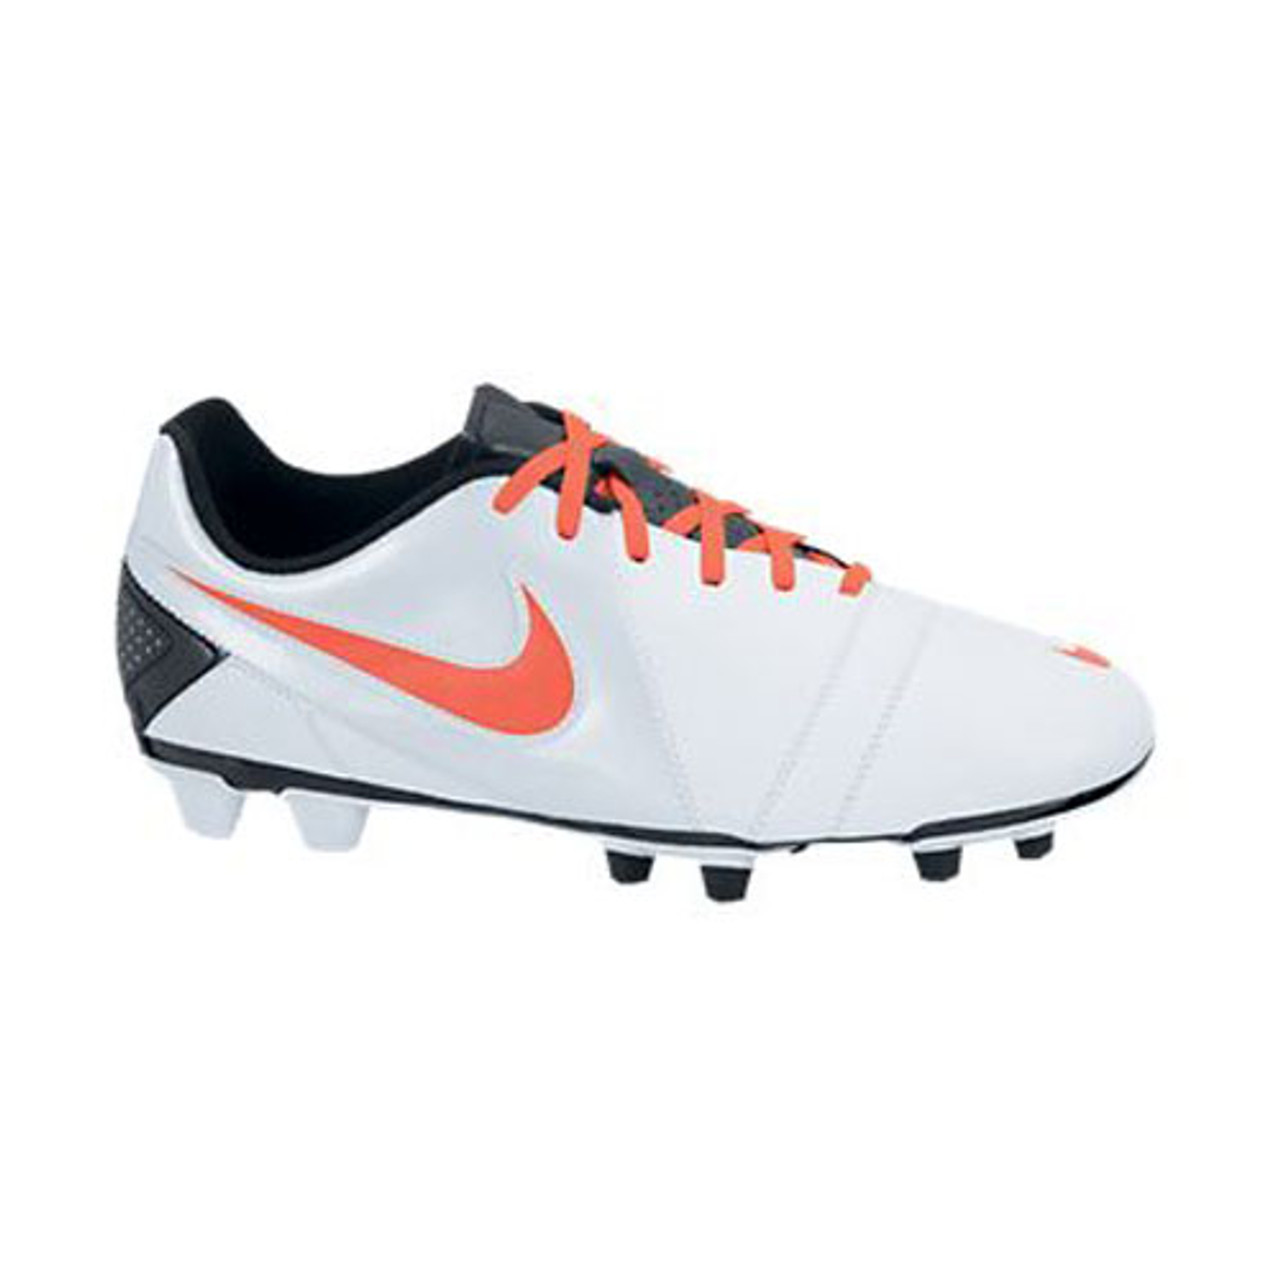 Nike CTR360 Enganche III FG Soccer Cleats White/Crimson Mens Athletic Shoes - | Discount Nike Men's Athletic & More - Shoolu.com Shoolu.com